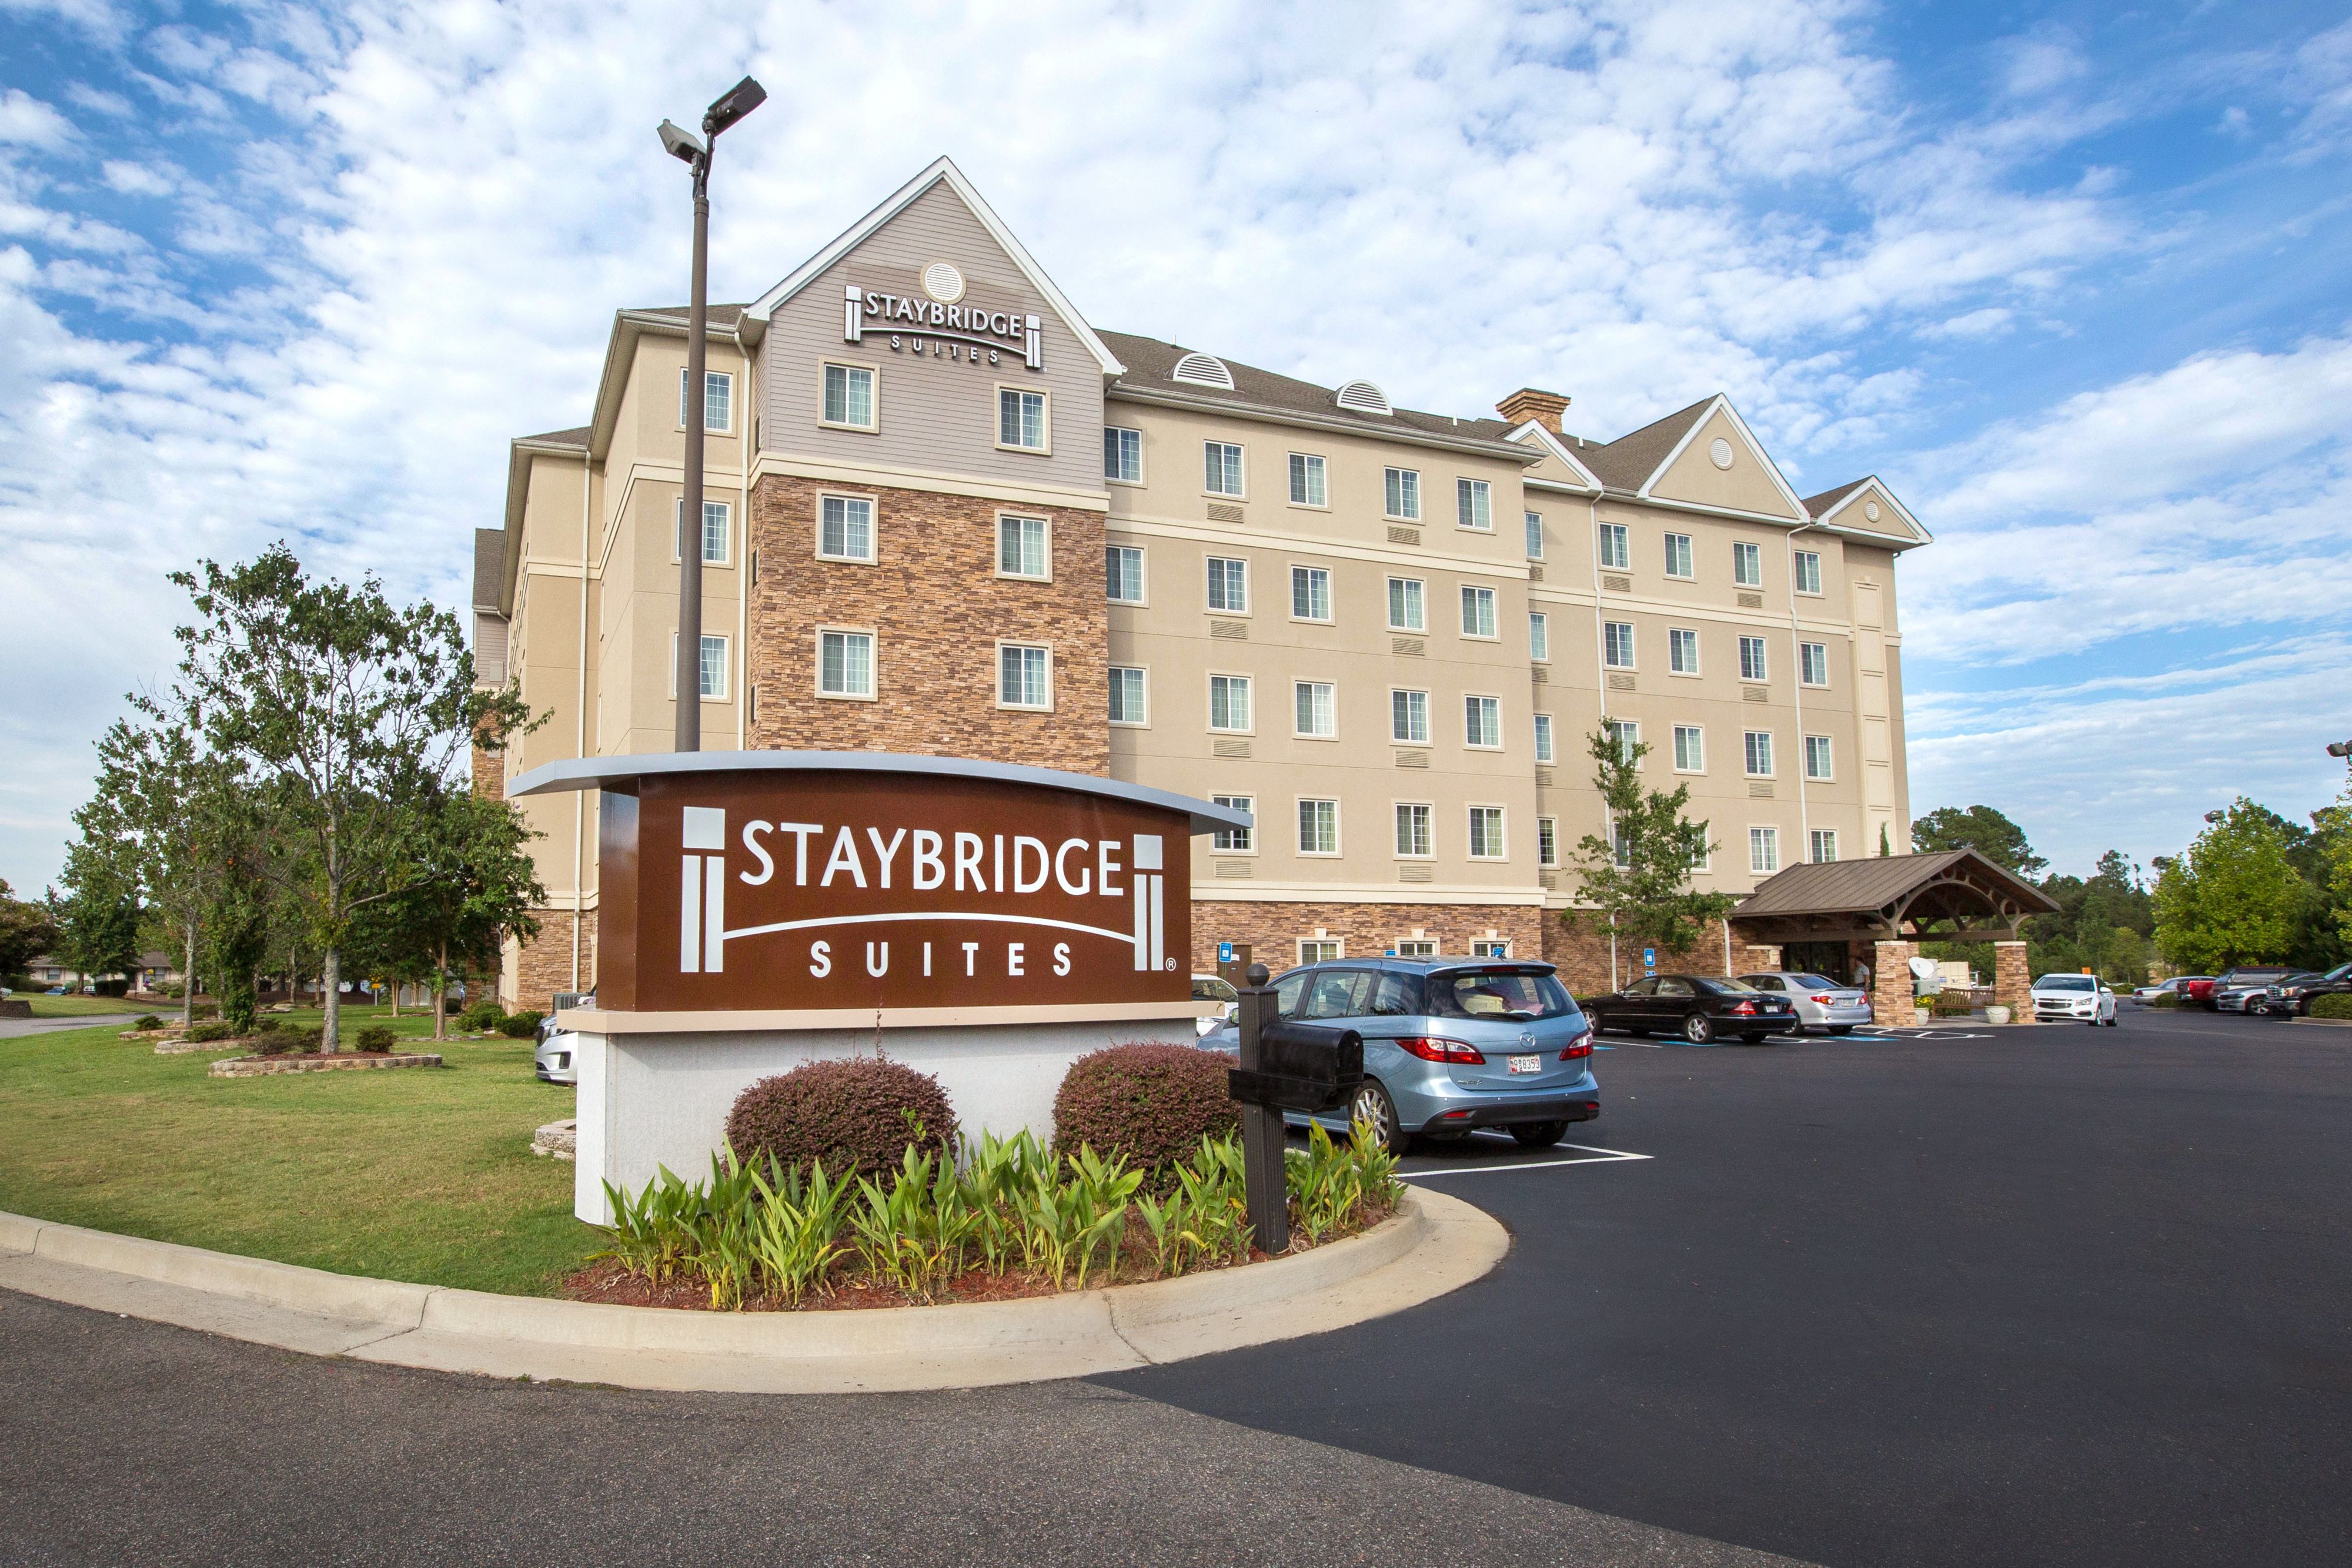 staybridge-suites-augusta-4743773926-original.jpg